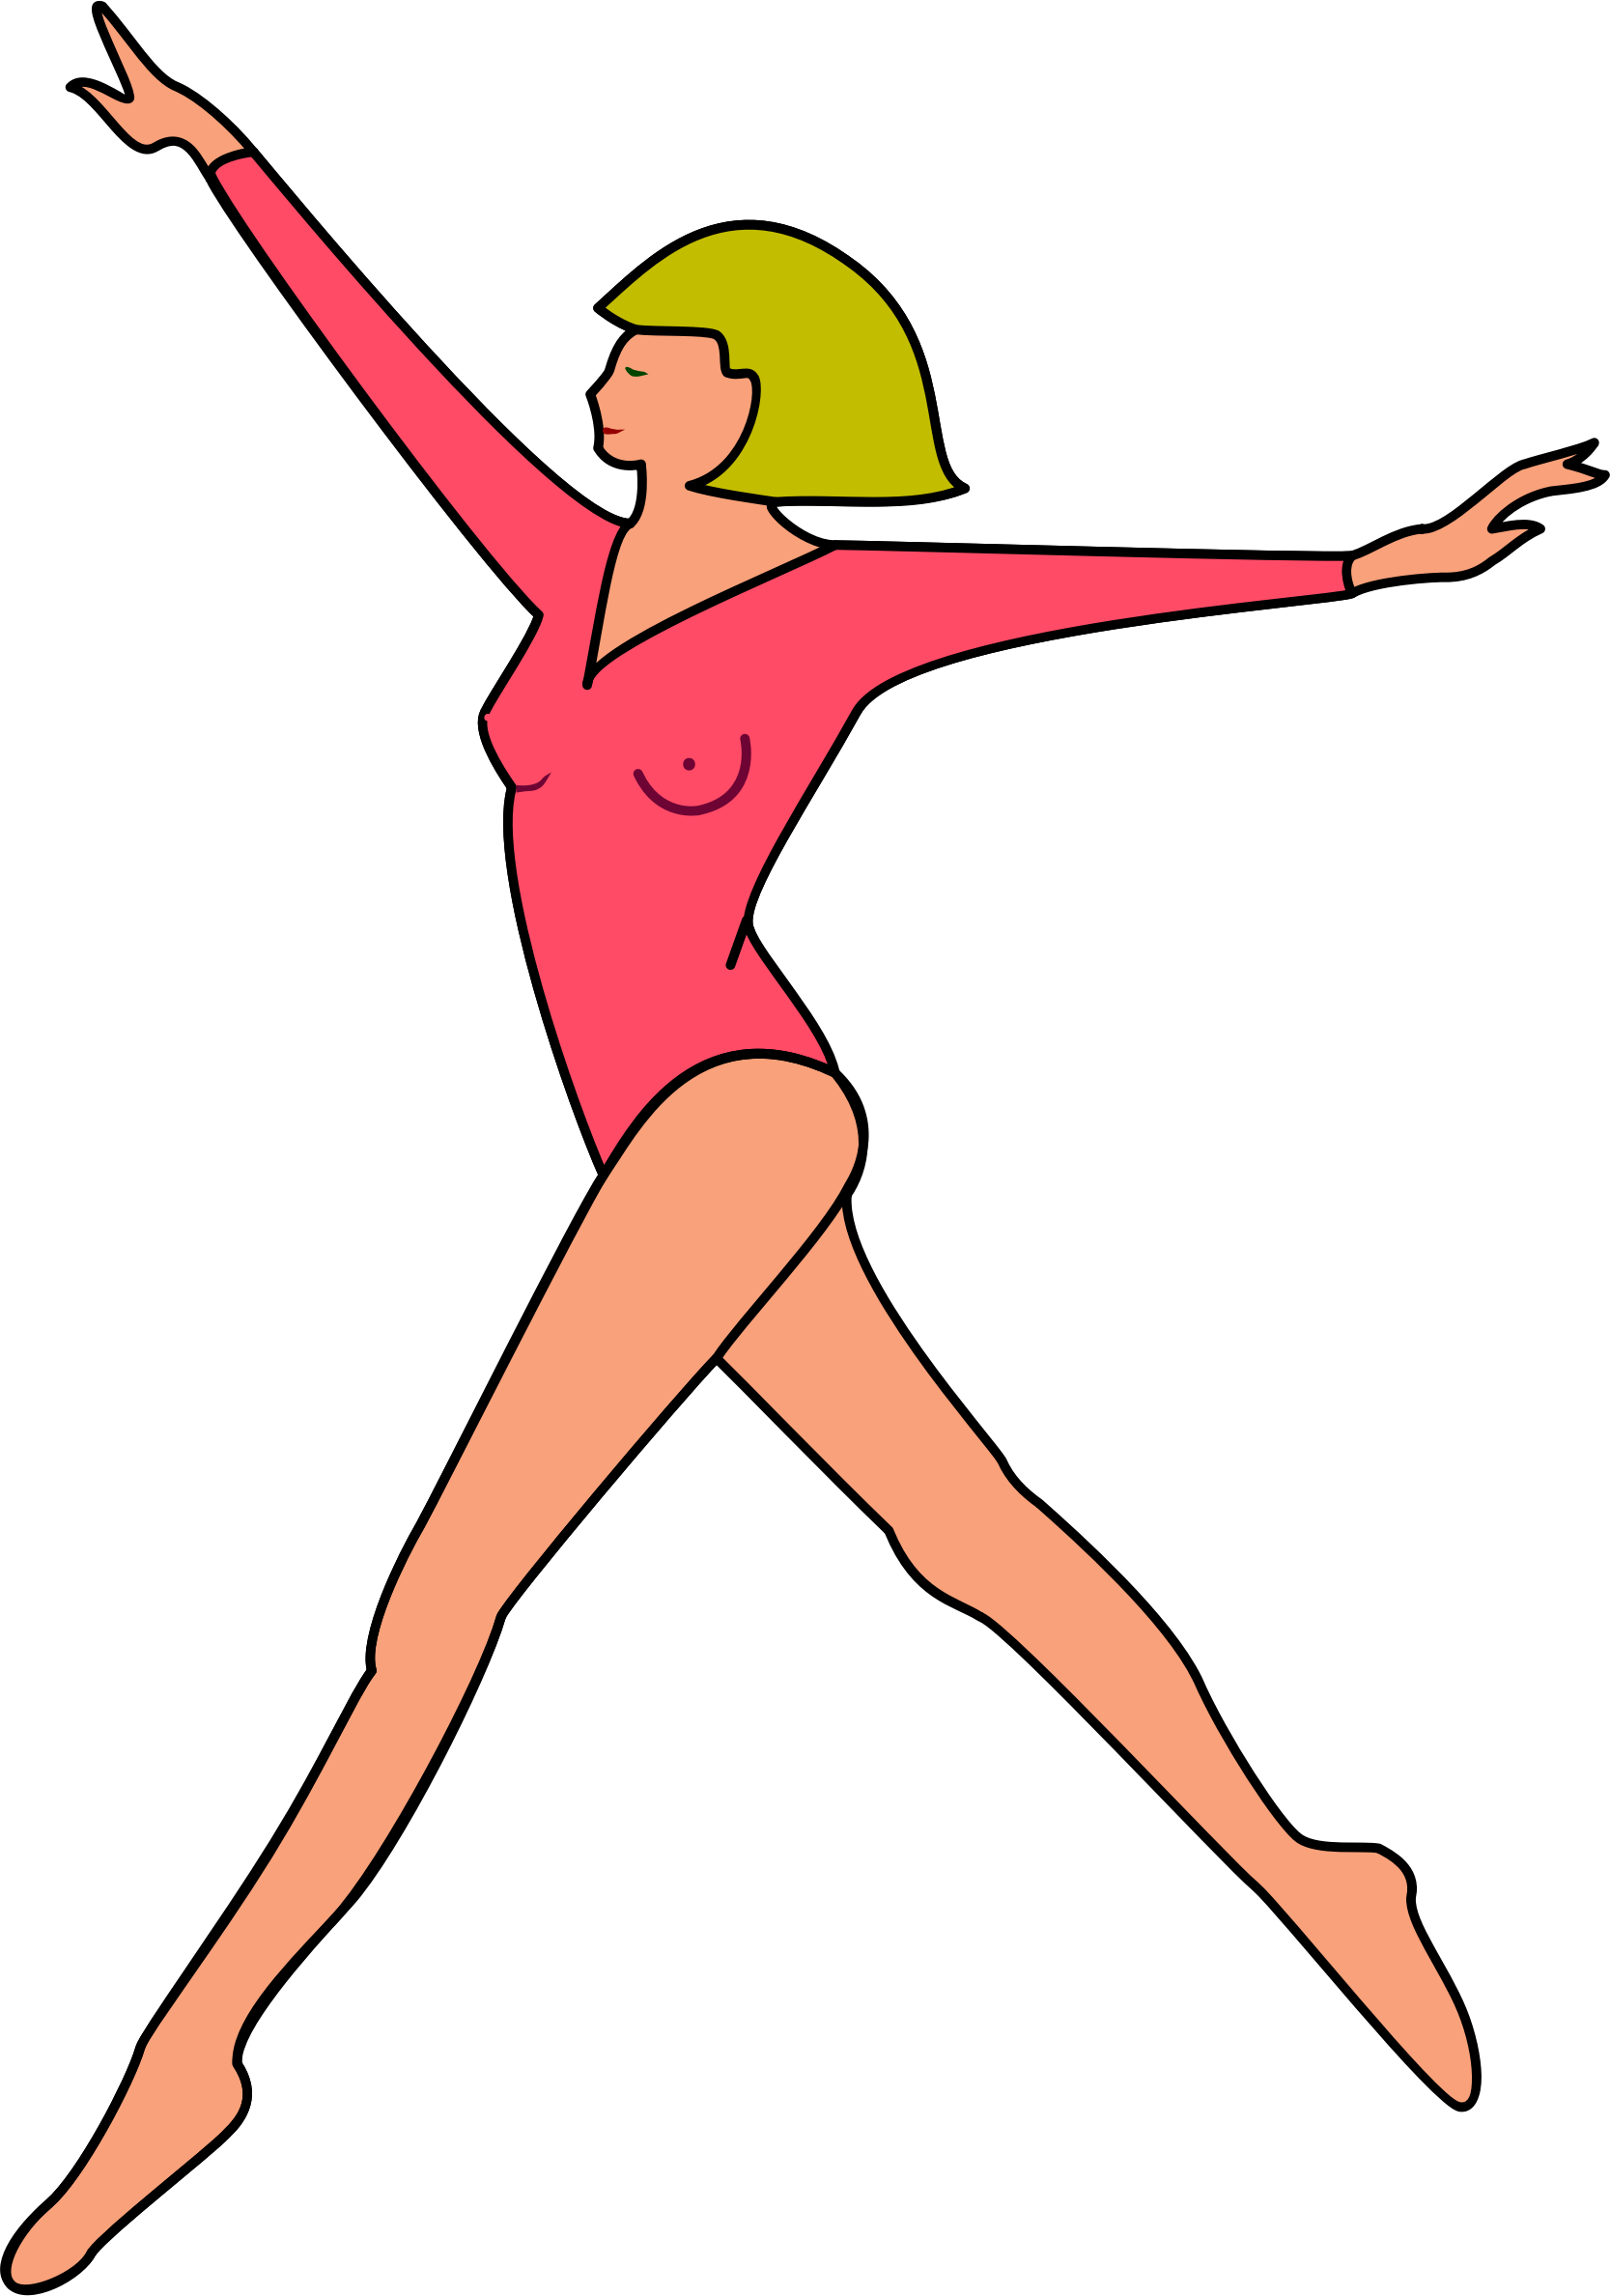 Dance aerobics big image. Gymnastics clipart aerobic